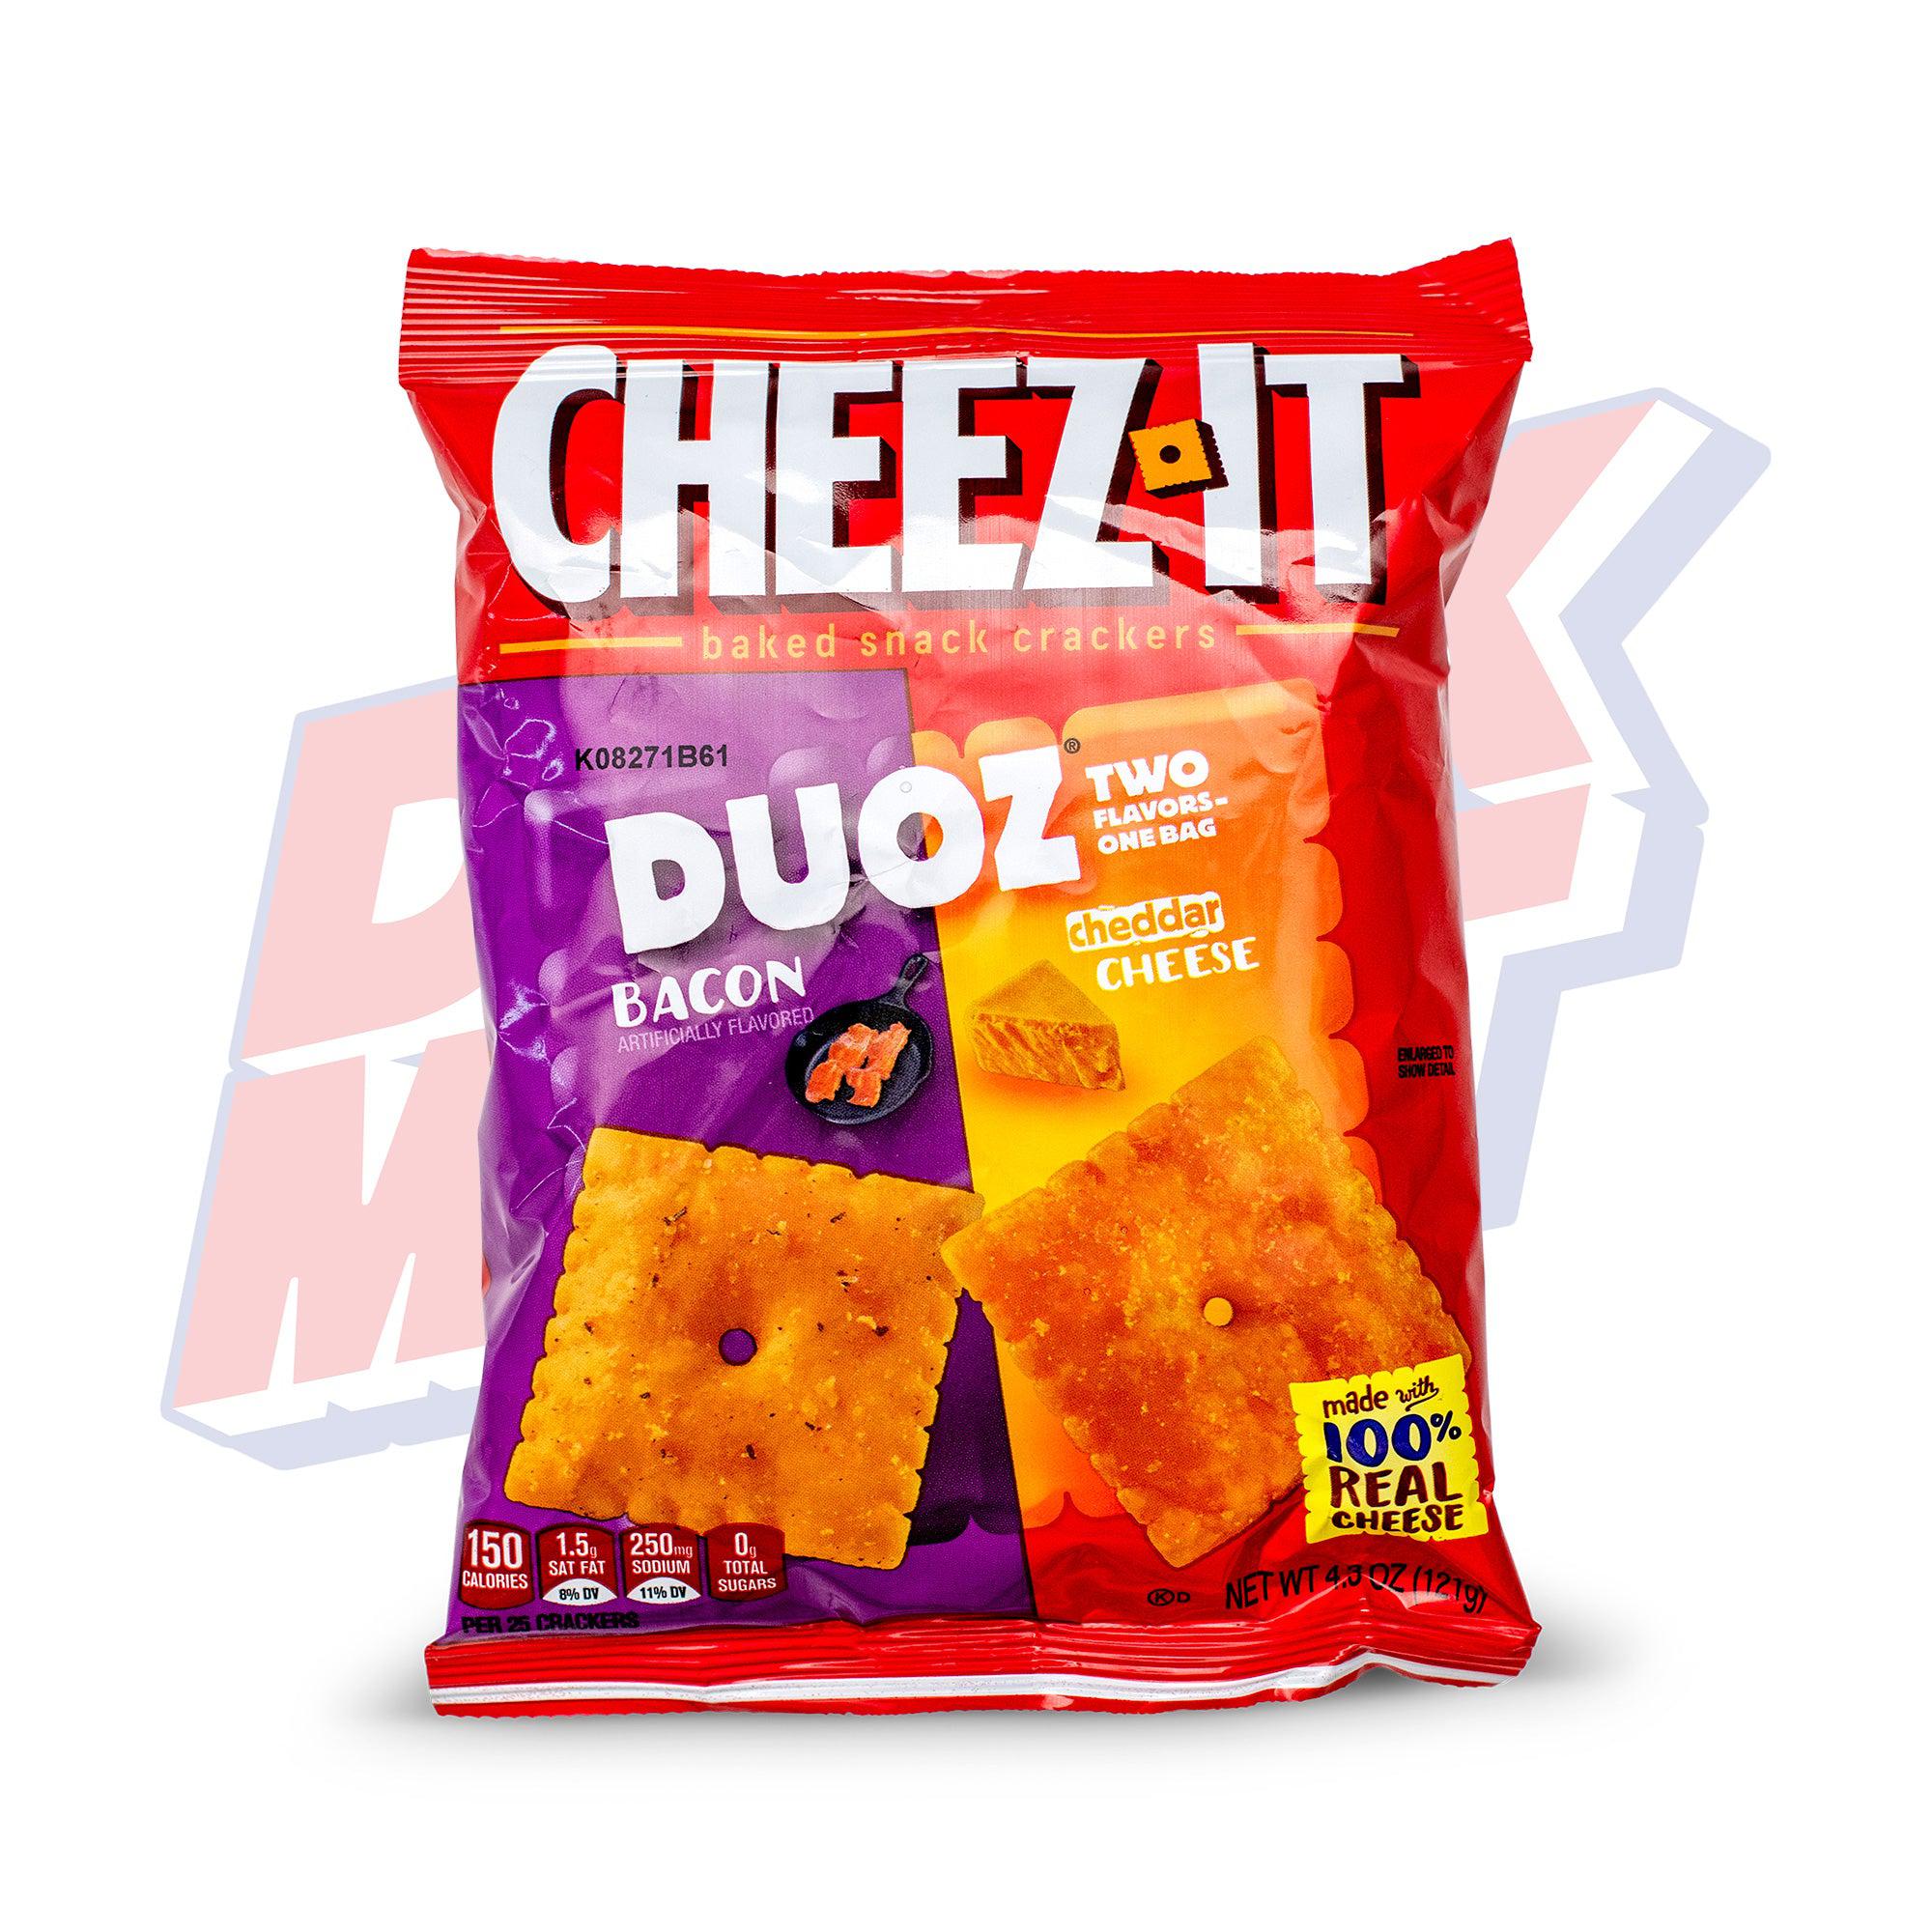 Cheez-It Duoz Bacon Cheddar - 4.3oz